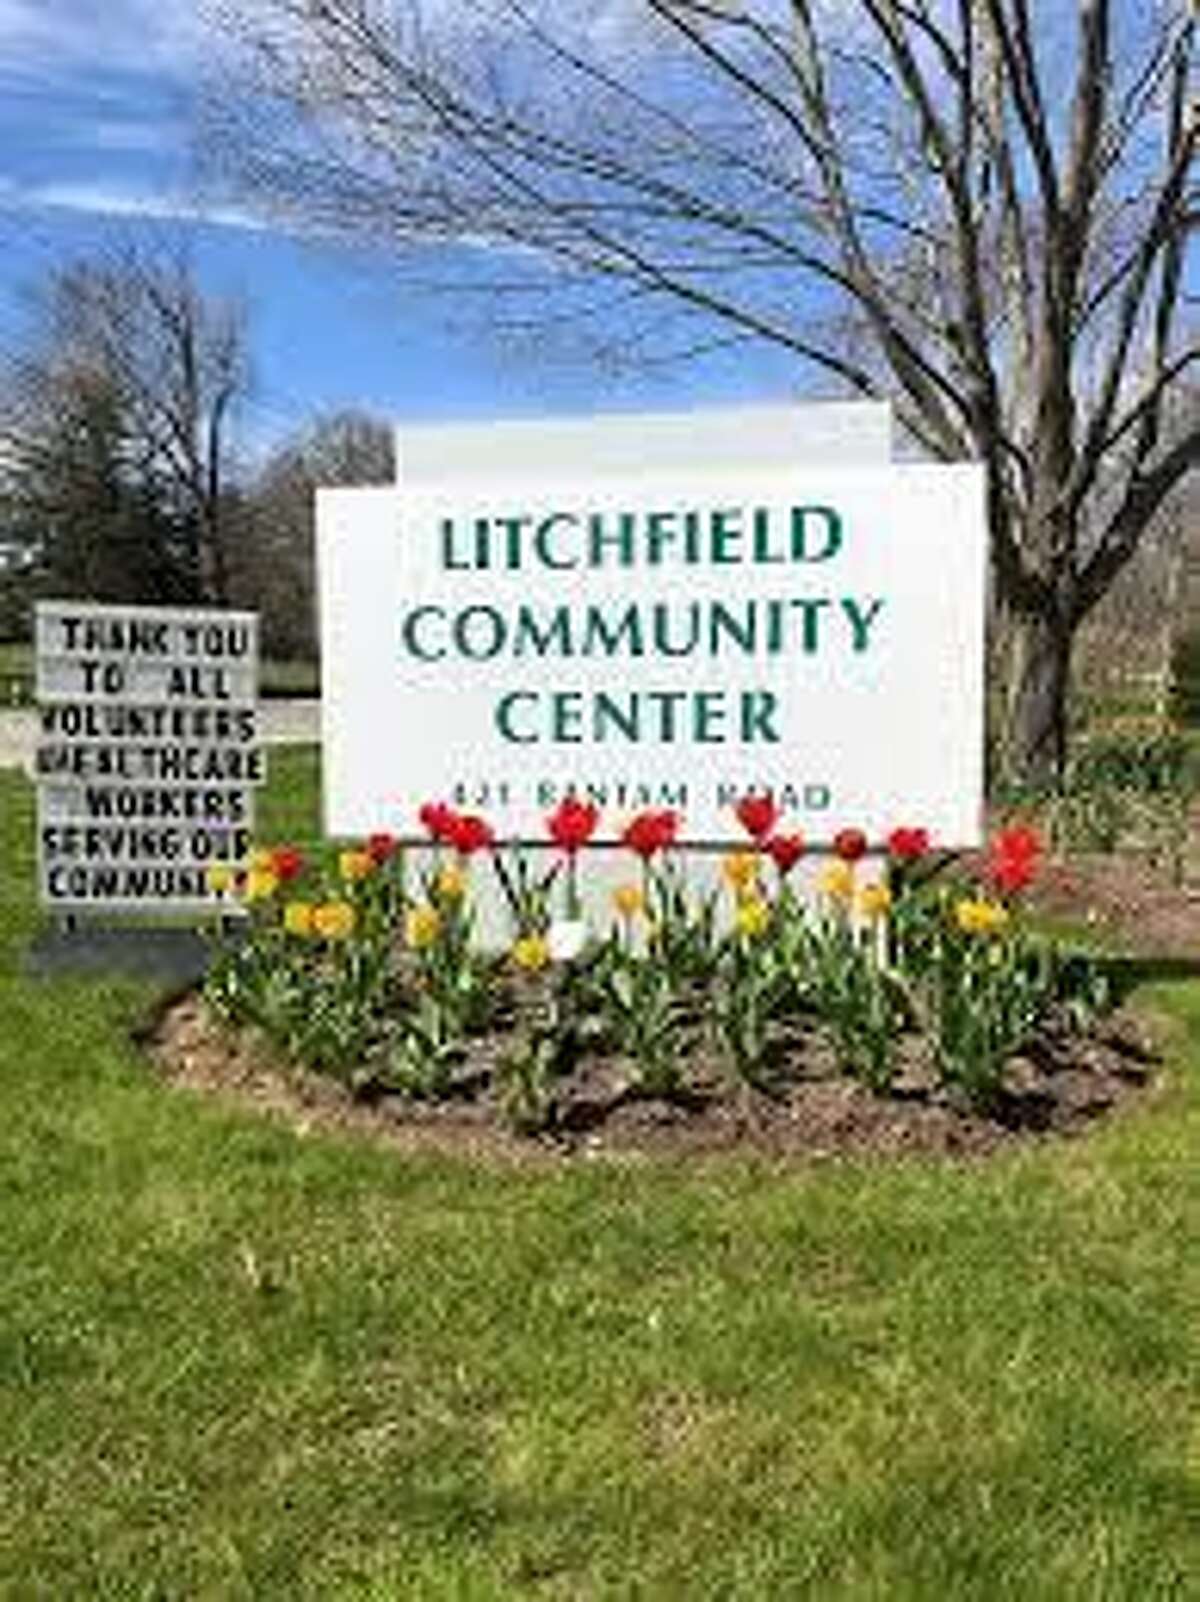 Litchfield Community Center on Bantam Road